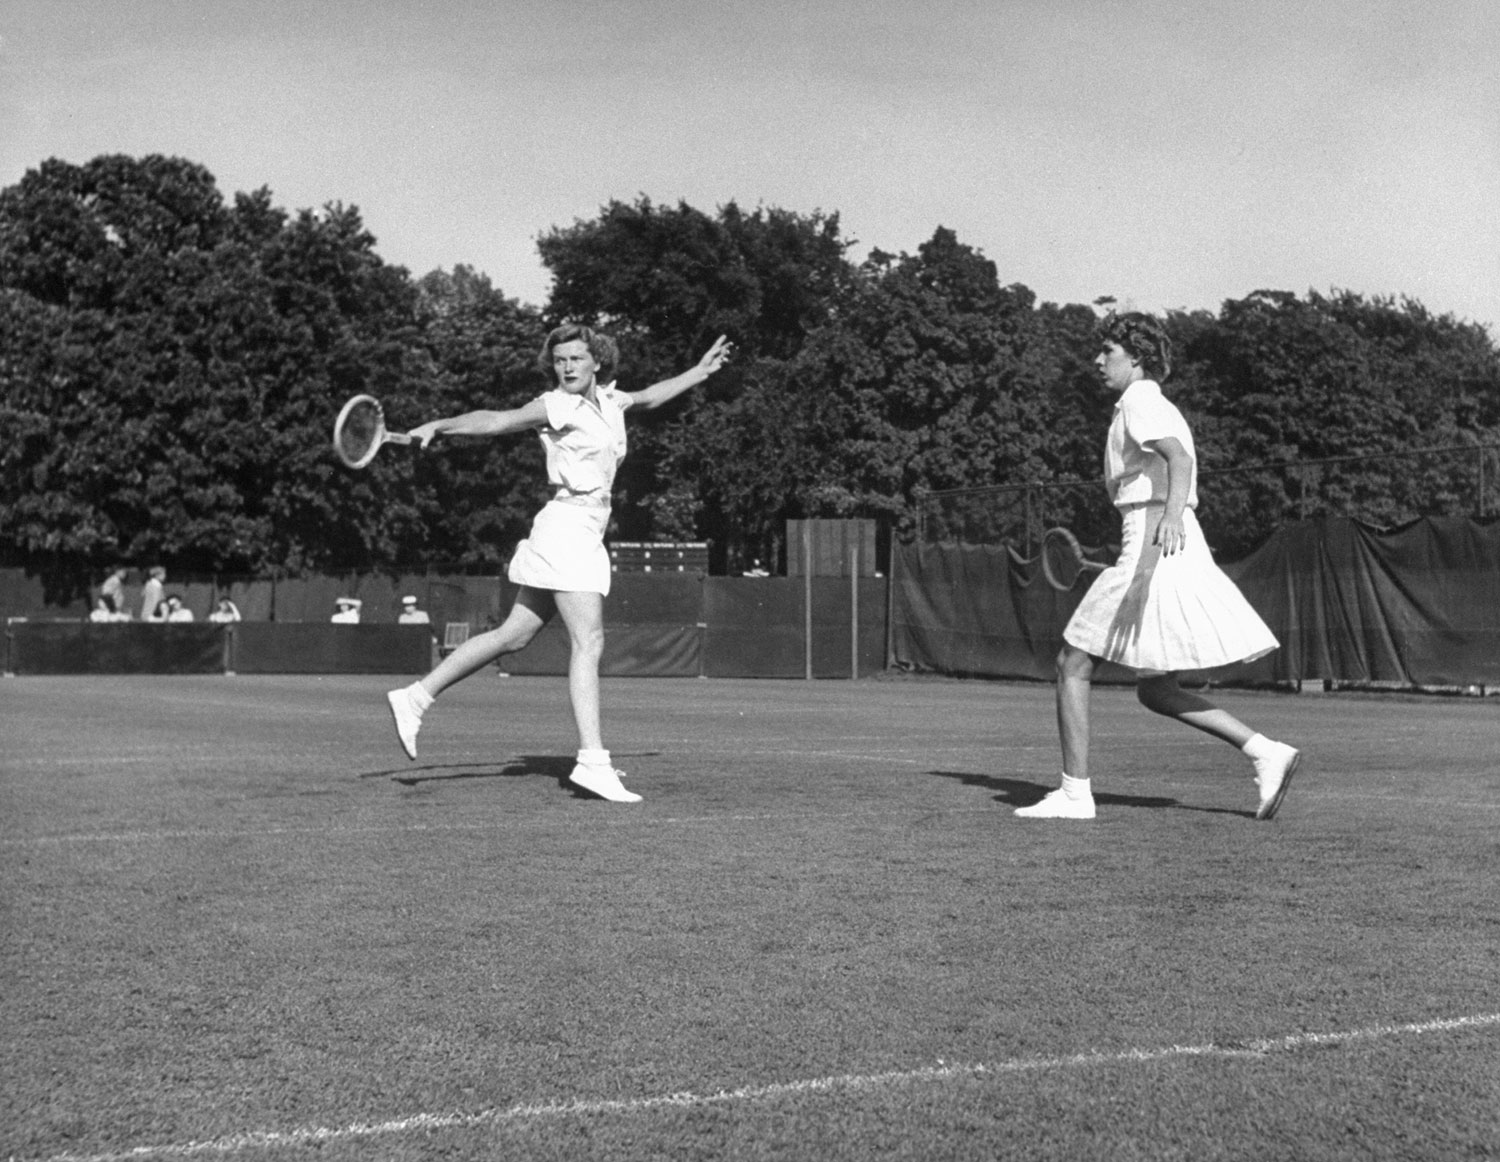 Tennis players, 1946.